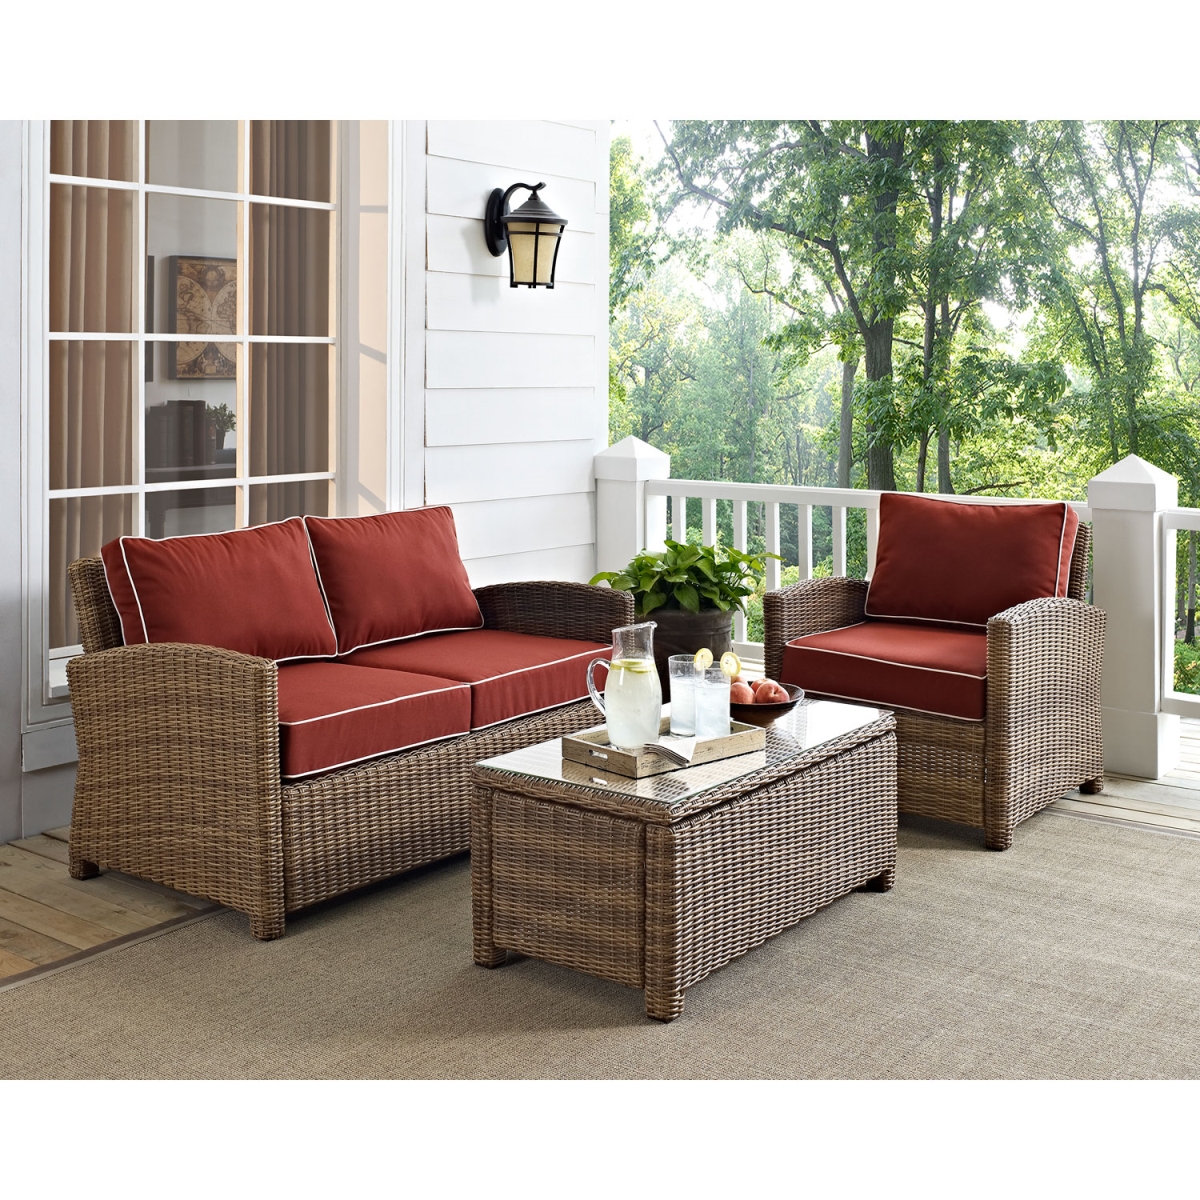 Ko70165-sg 3 Piece Bradenton Outdoor Loveseat Wicker Seating Set With Sangria Cushions - Weathered Brown